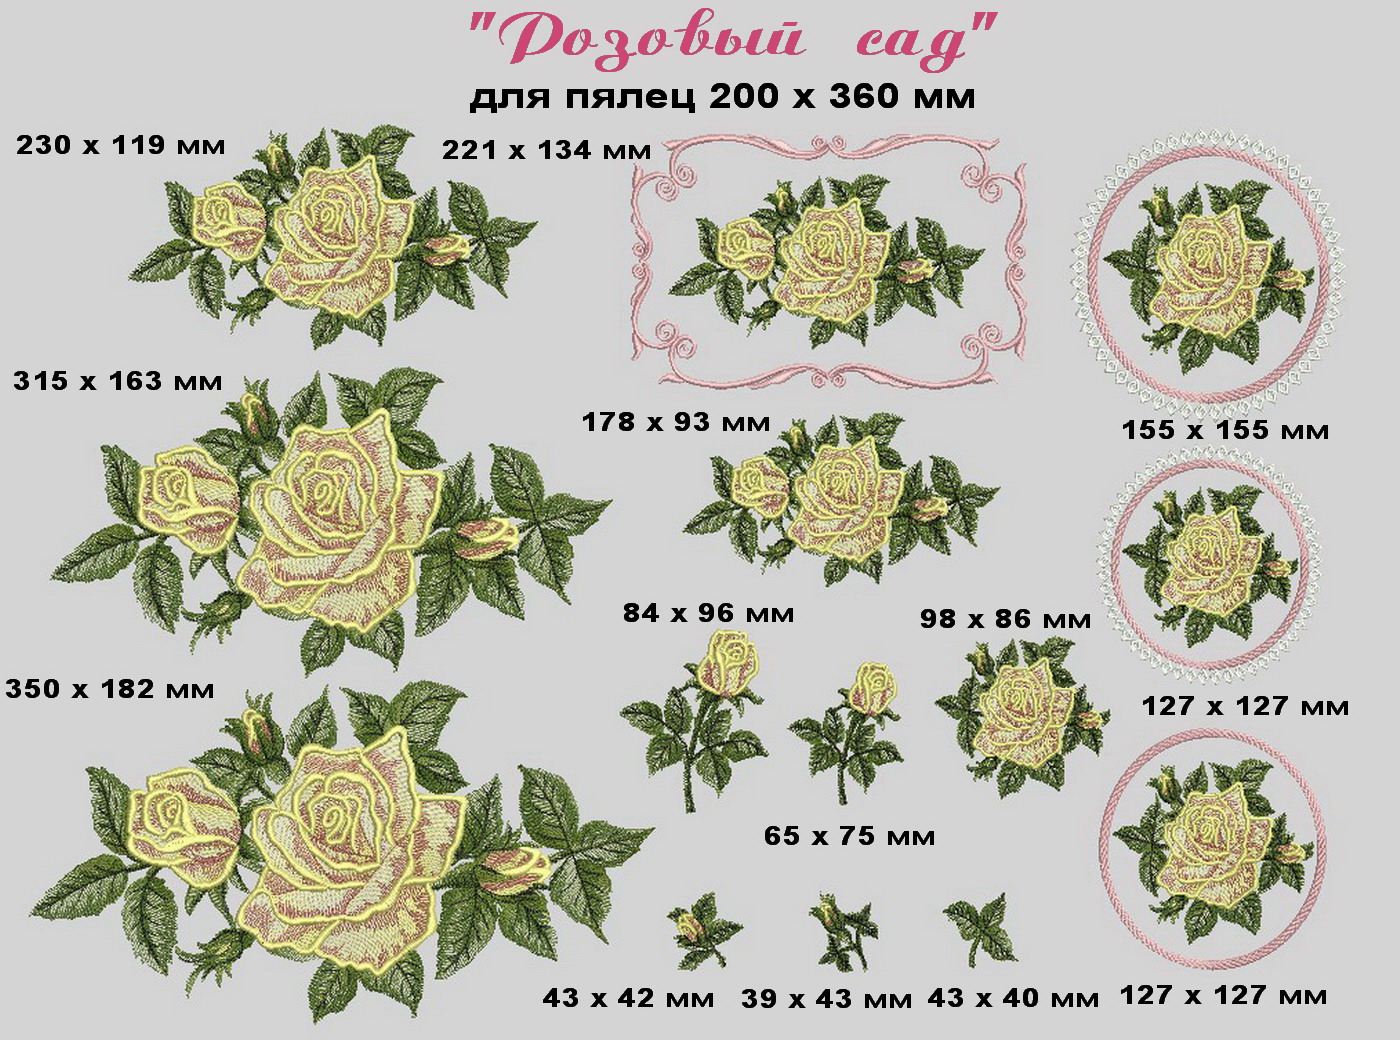 Розовый сад демо 200 360